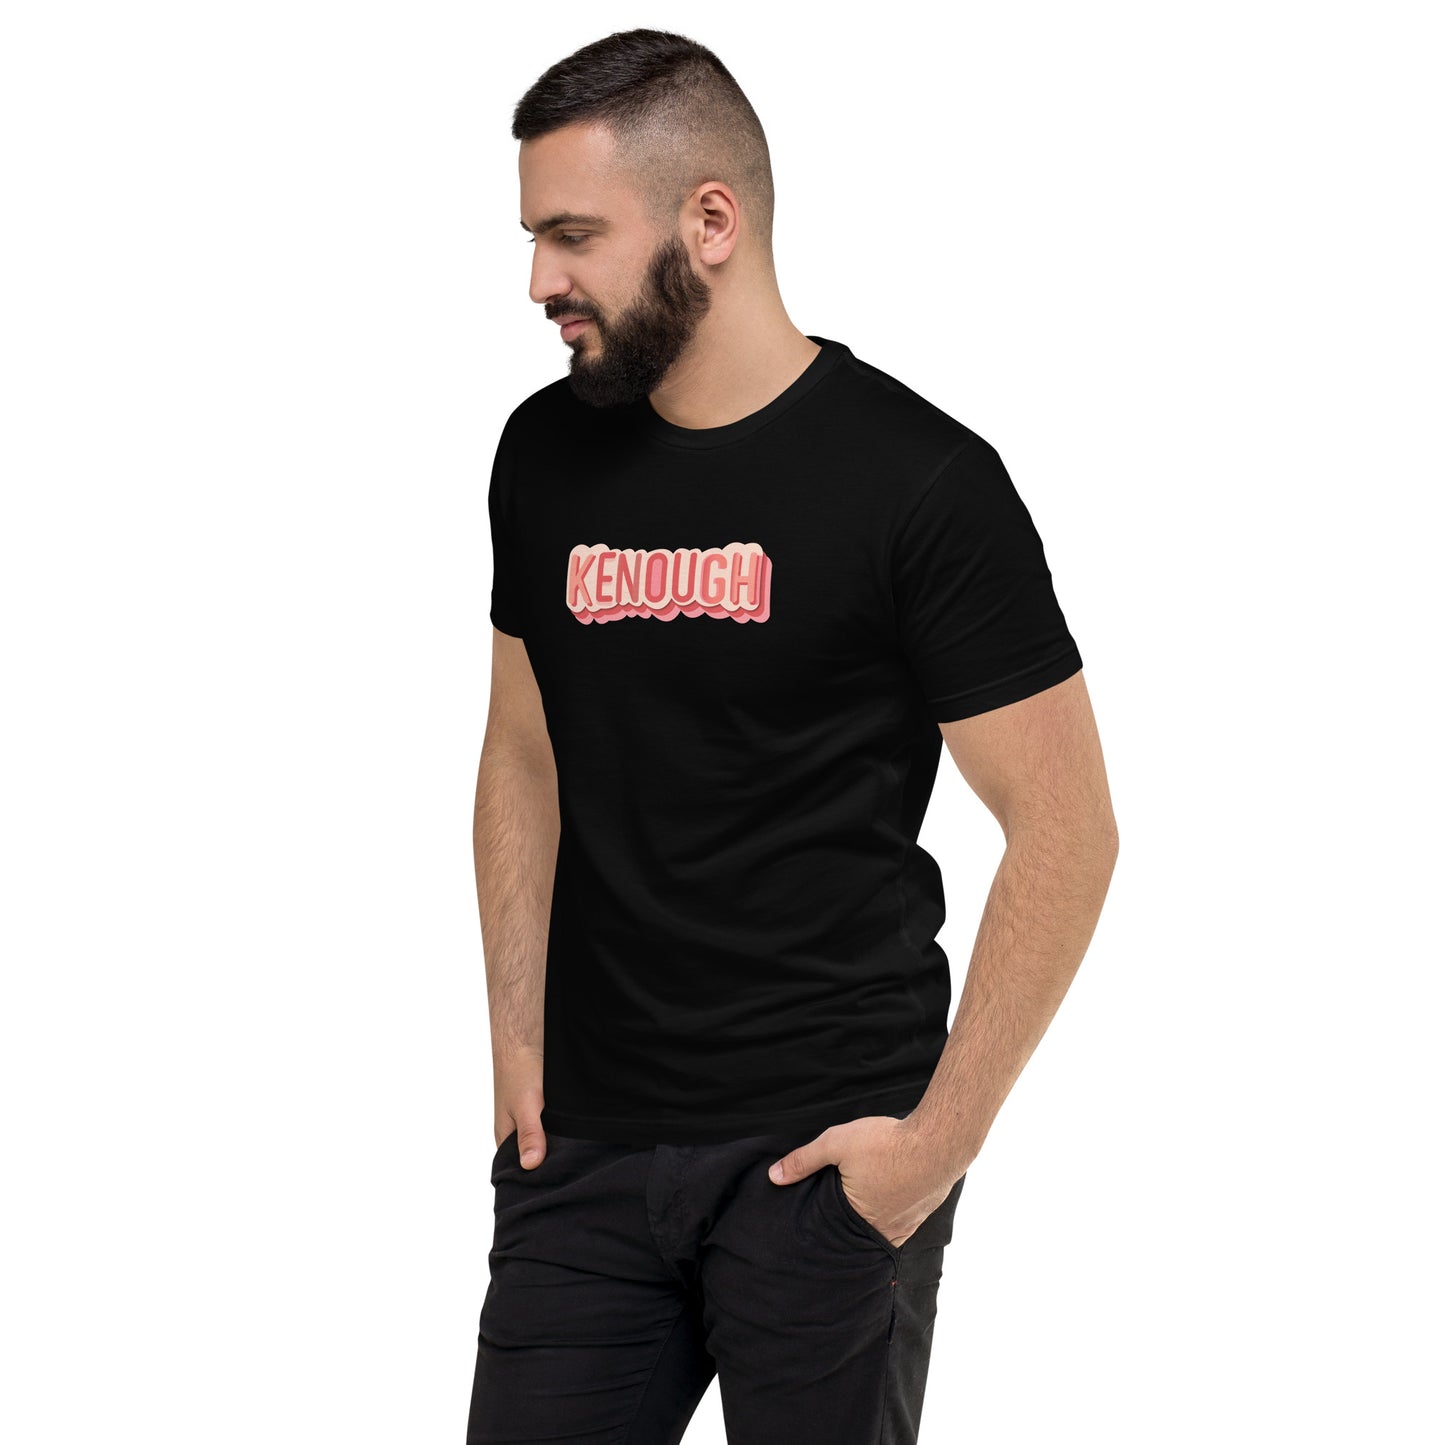 Kenough - Short Sleeve T-shirt